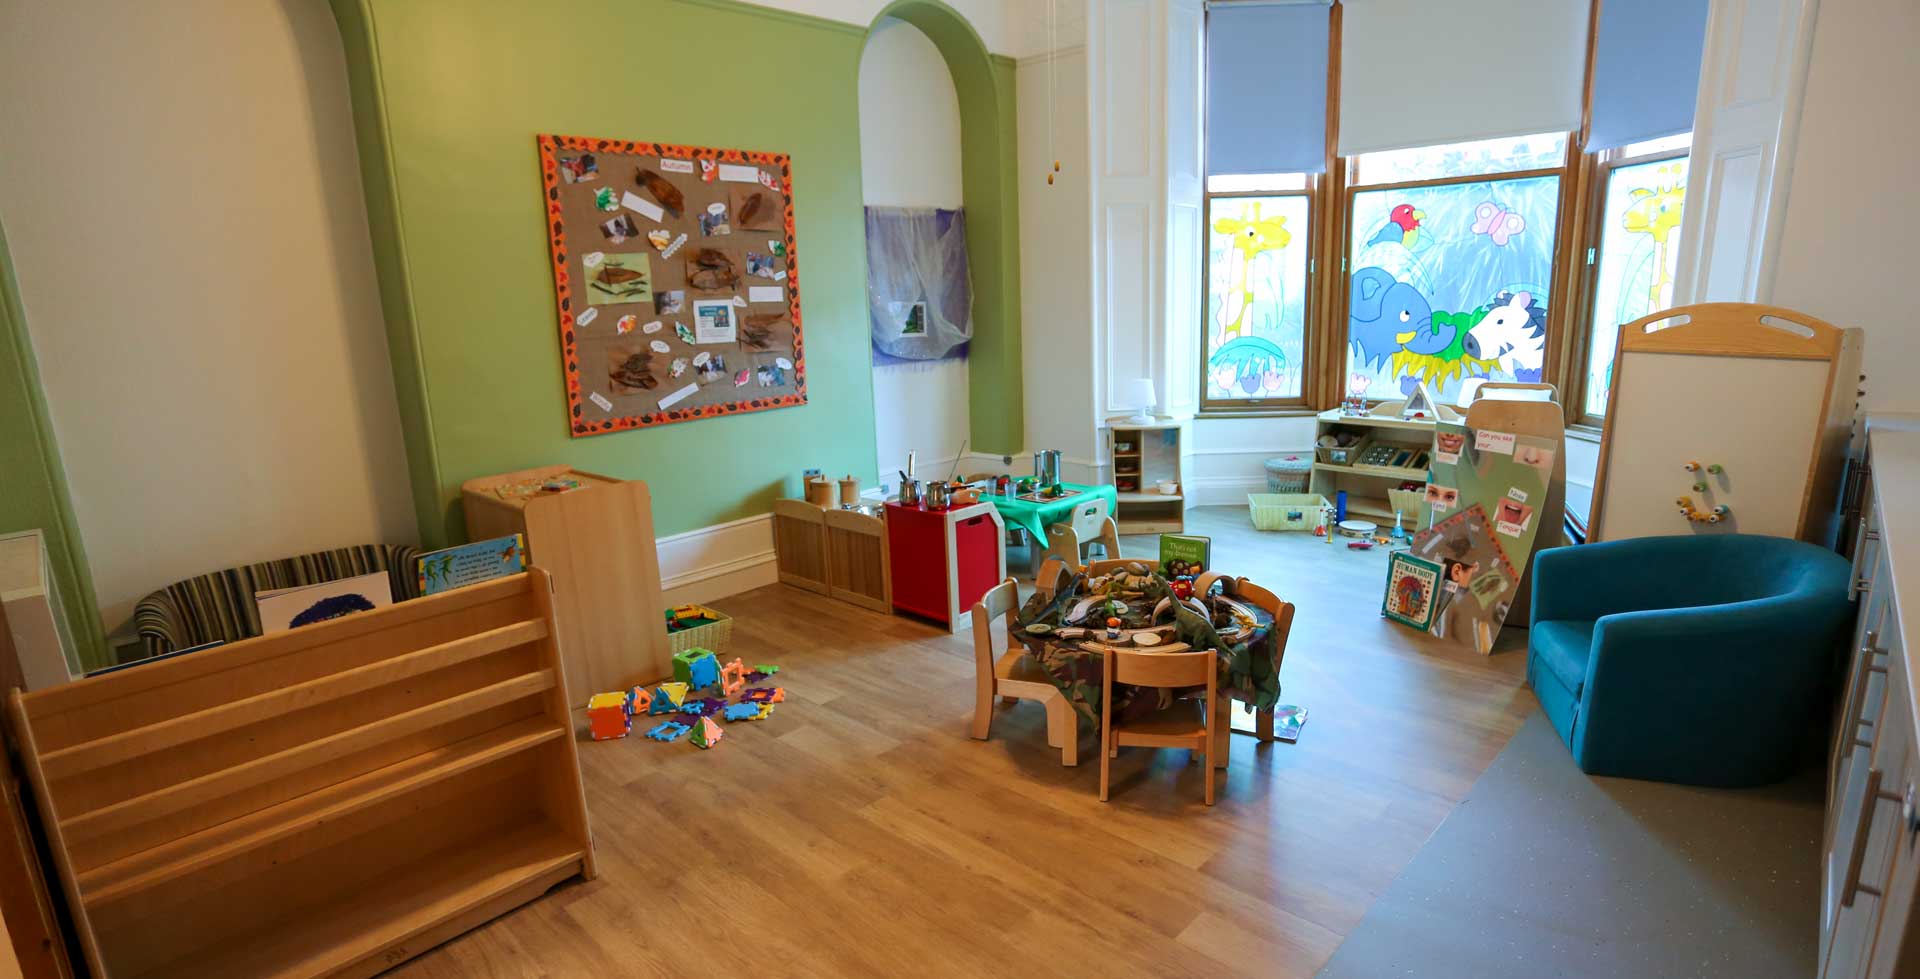 24 St Swithin Nursery Room Preschool